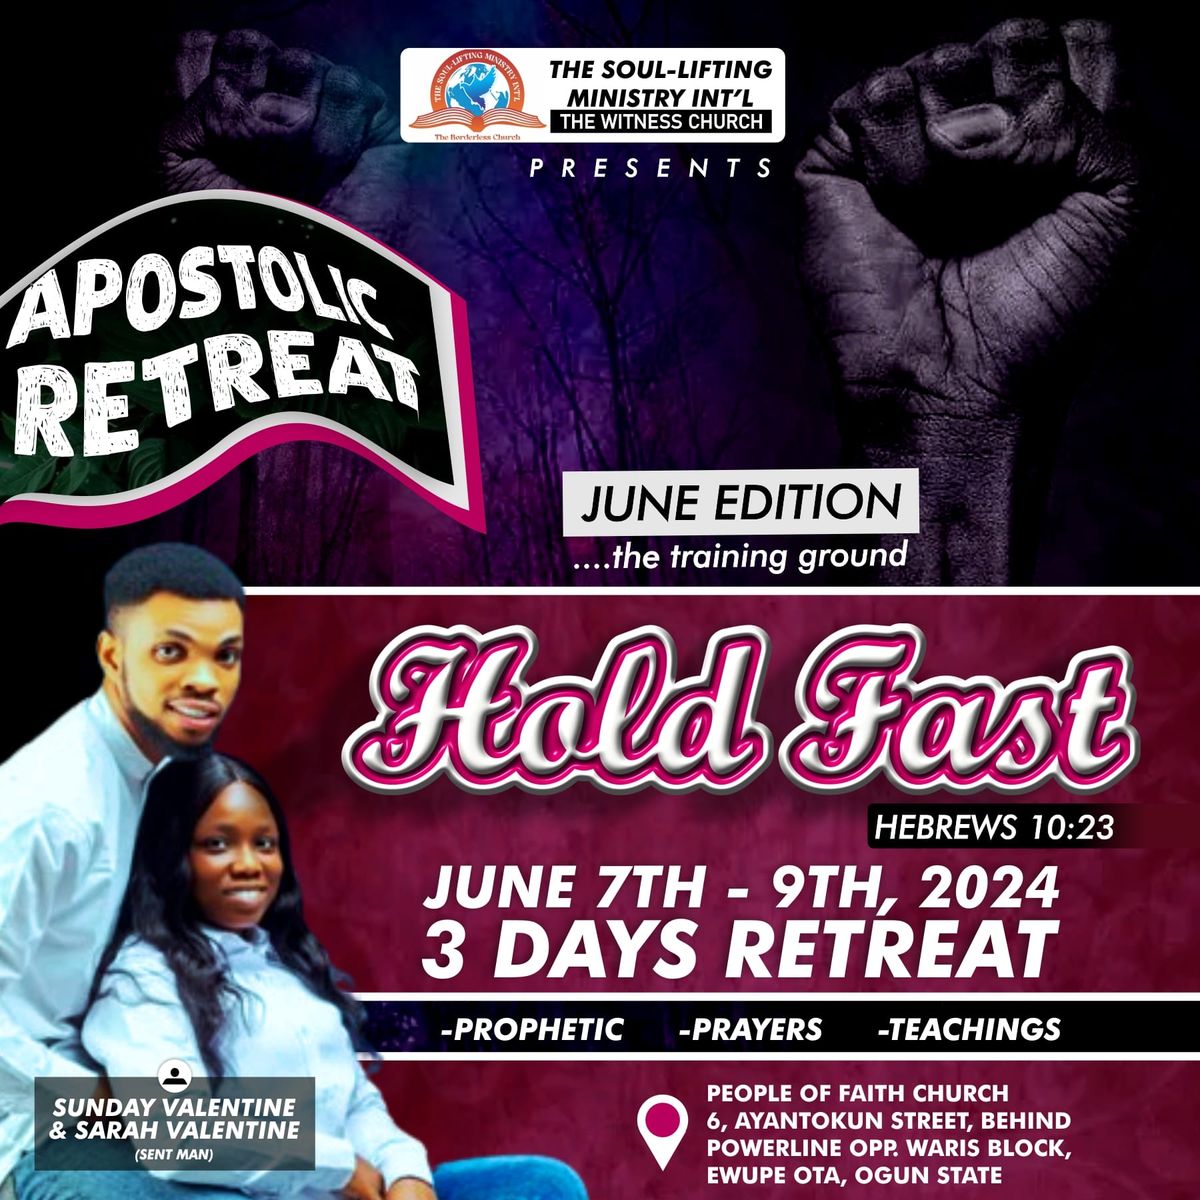 Apostolic Training Ground Camp Meeting: HOLD FAST 